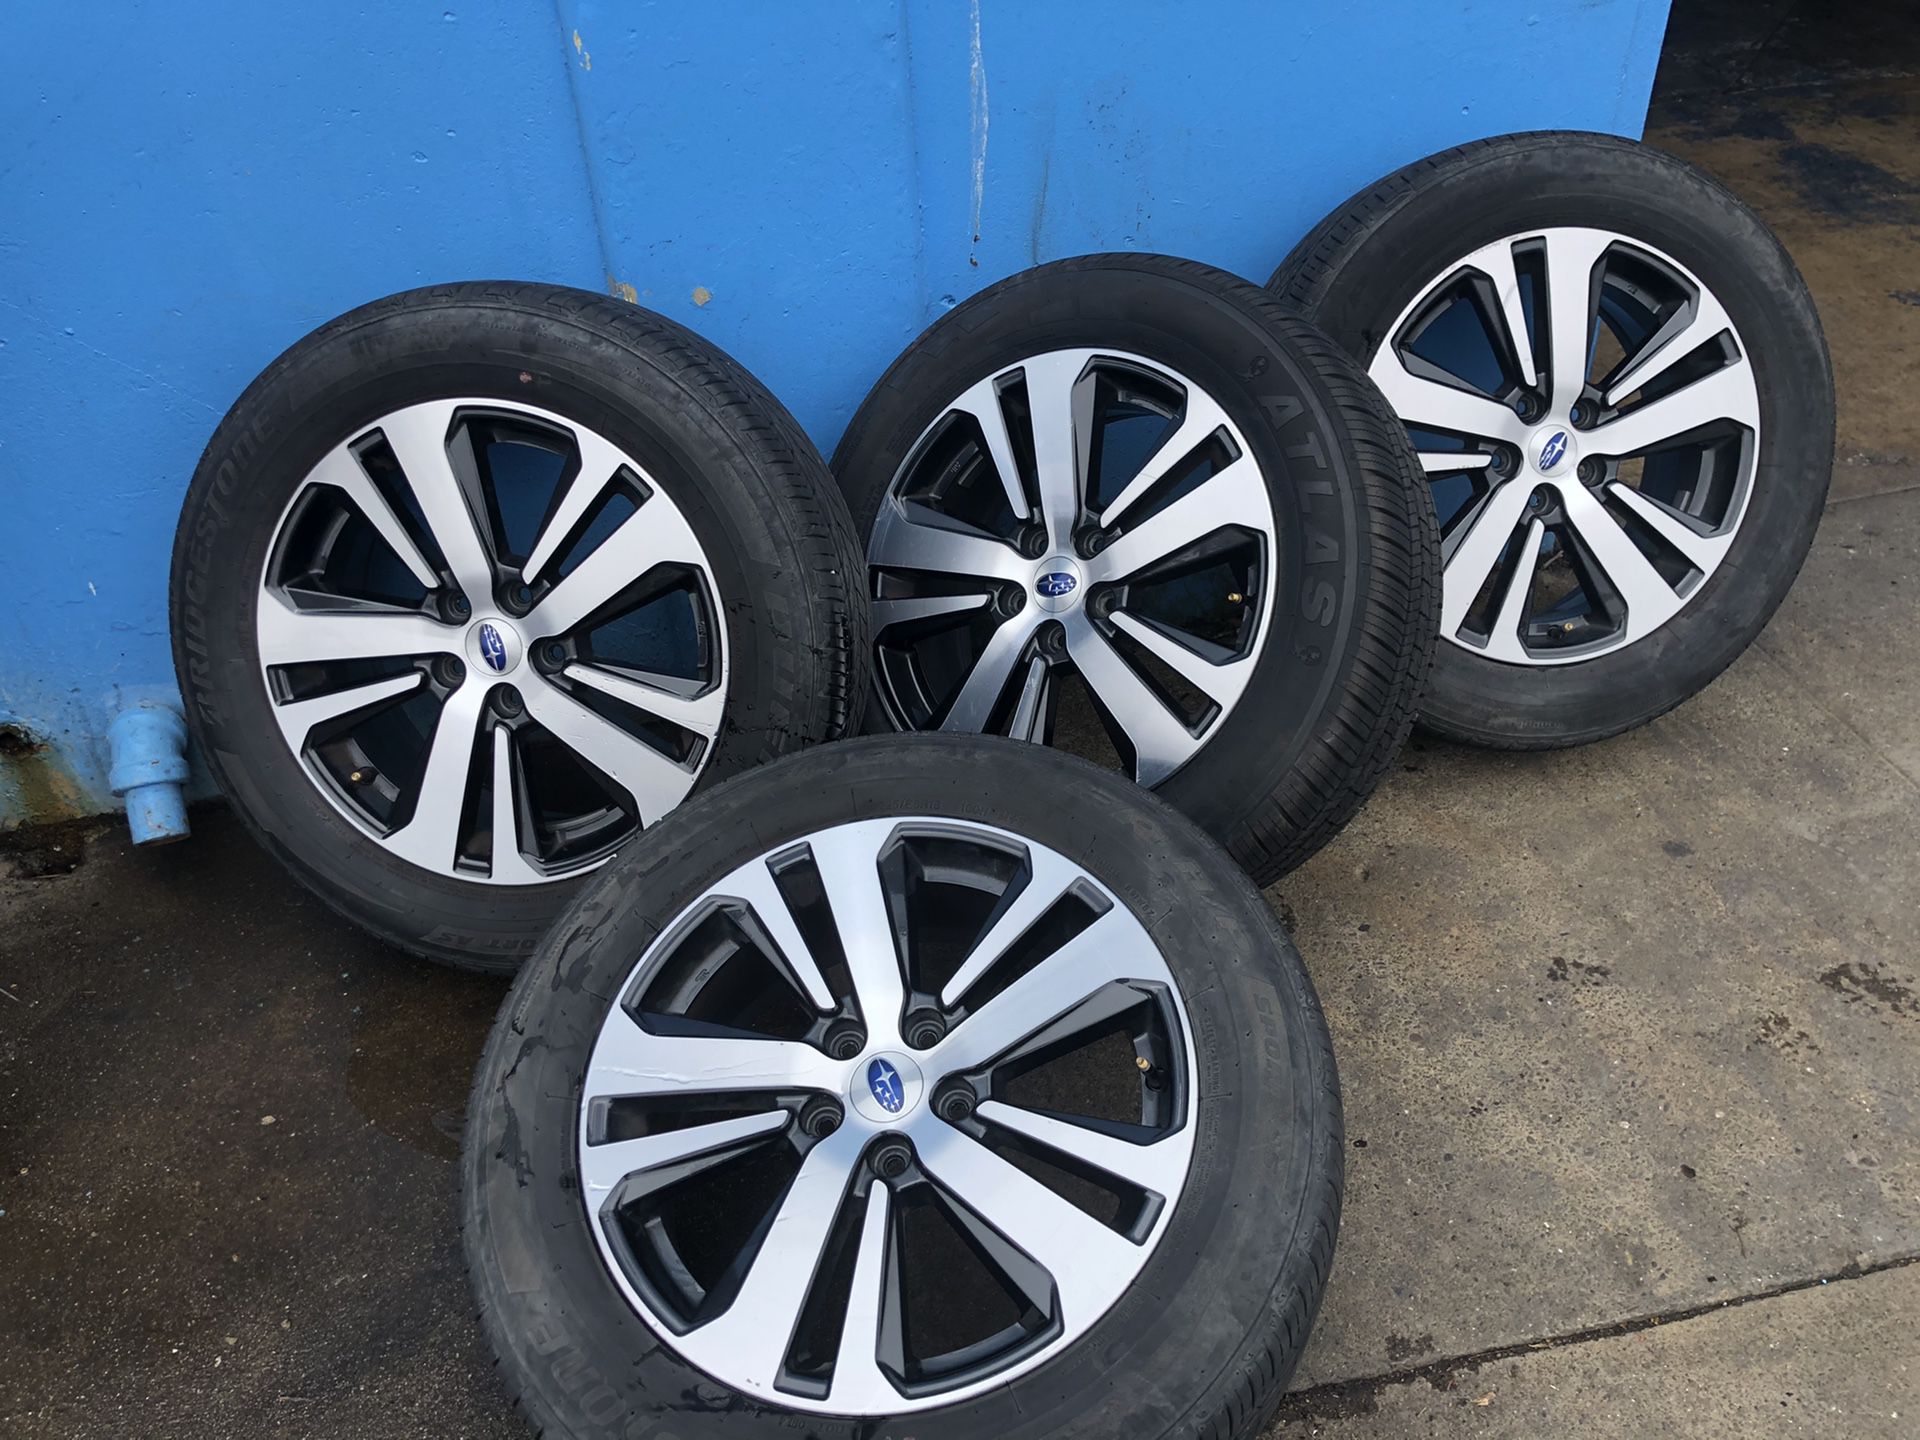 2019 Subaru Outback wheels